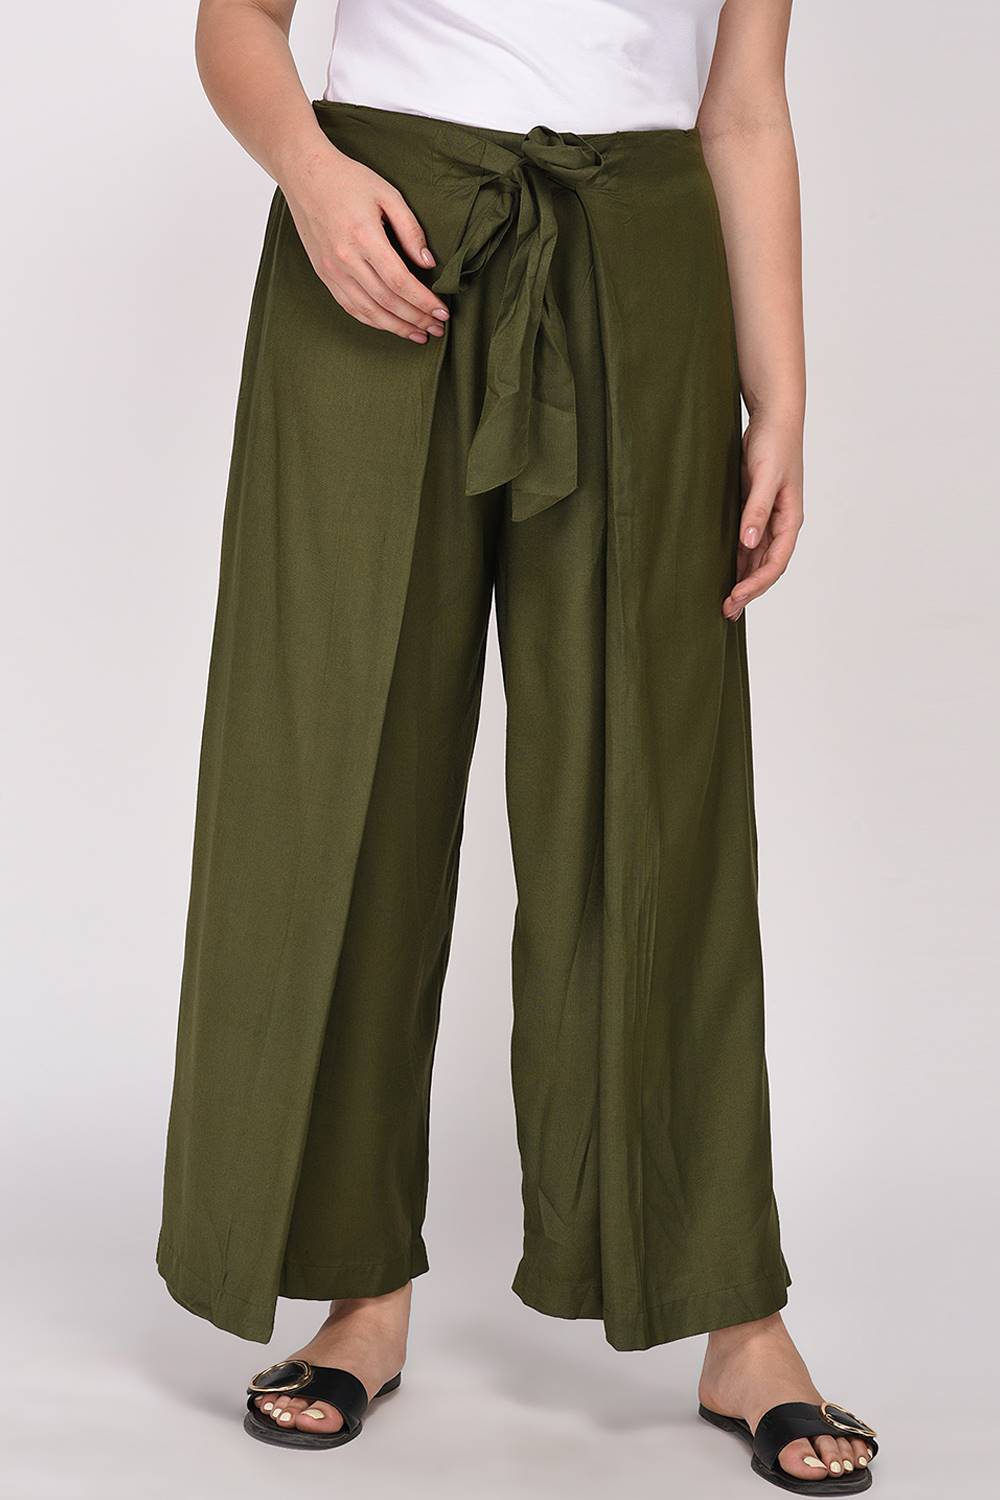 Olive Green Wrap Trouser - LASTINCH